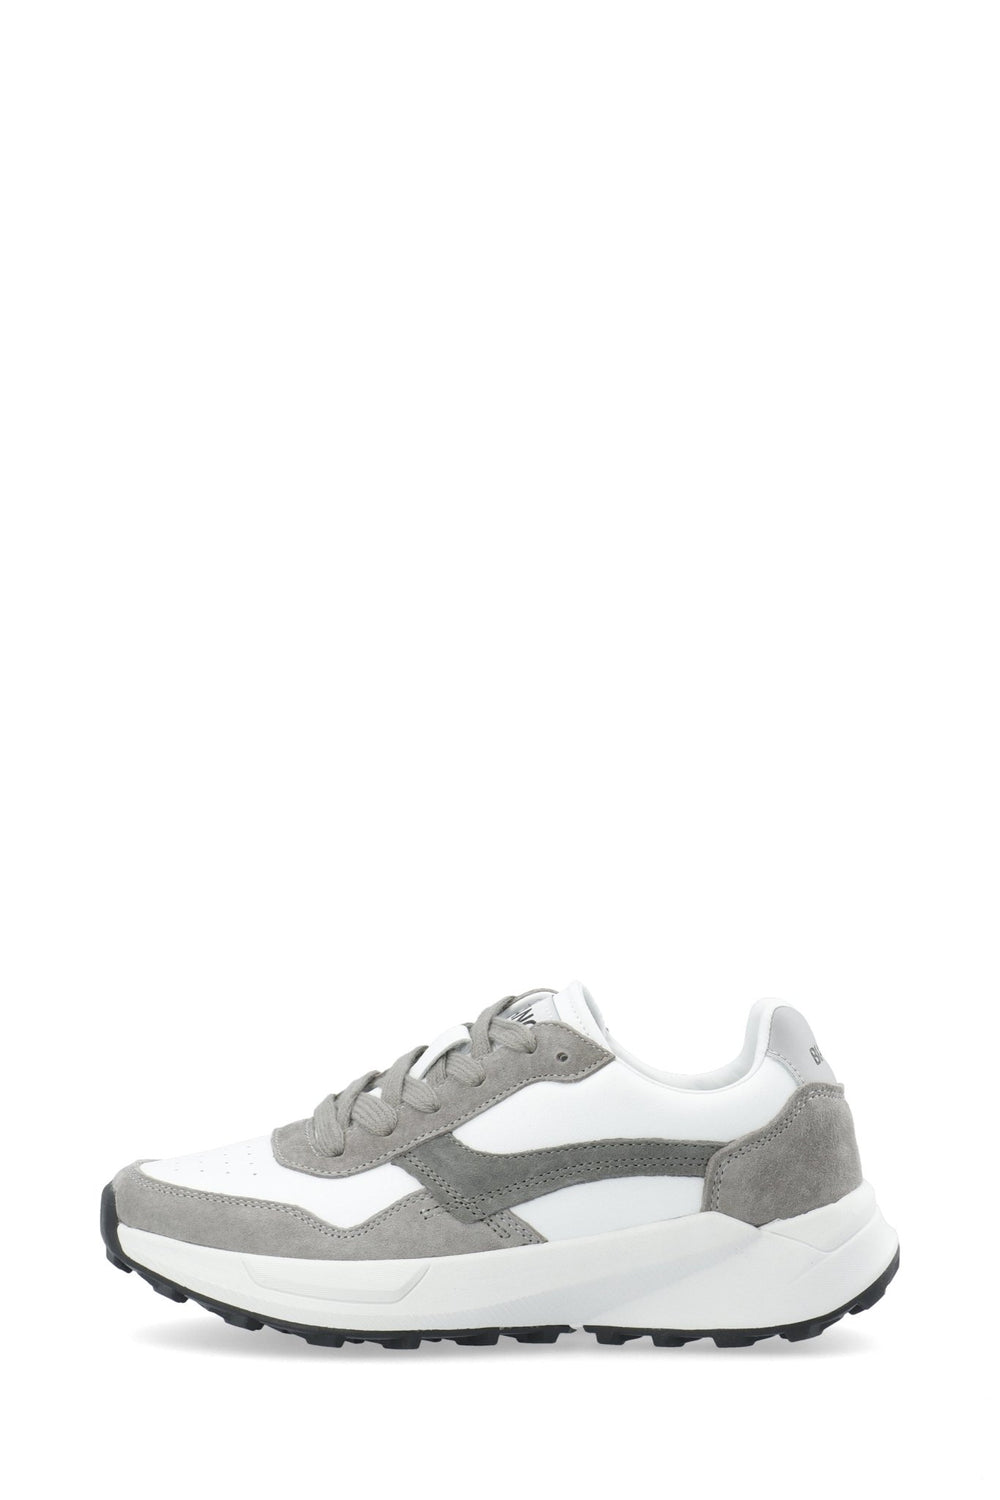 Bialucy Sneakers Grey | Sko | Smuk - Dameklær på nett